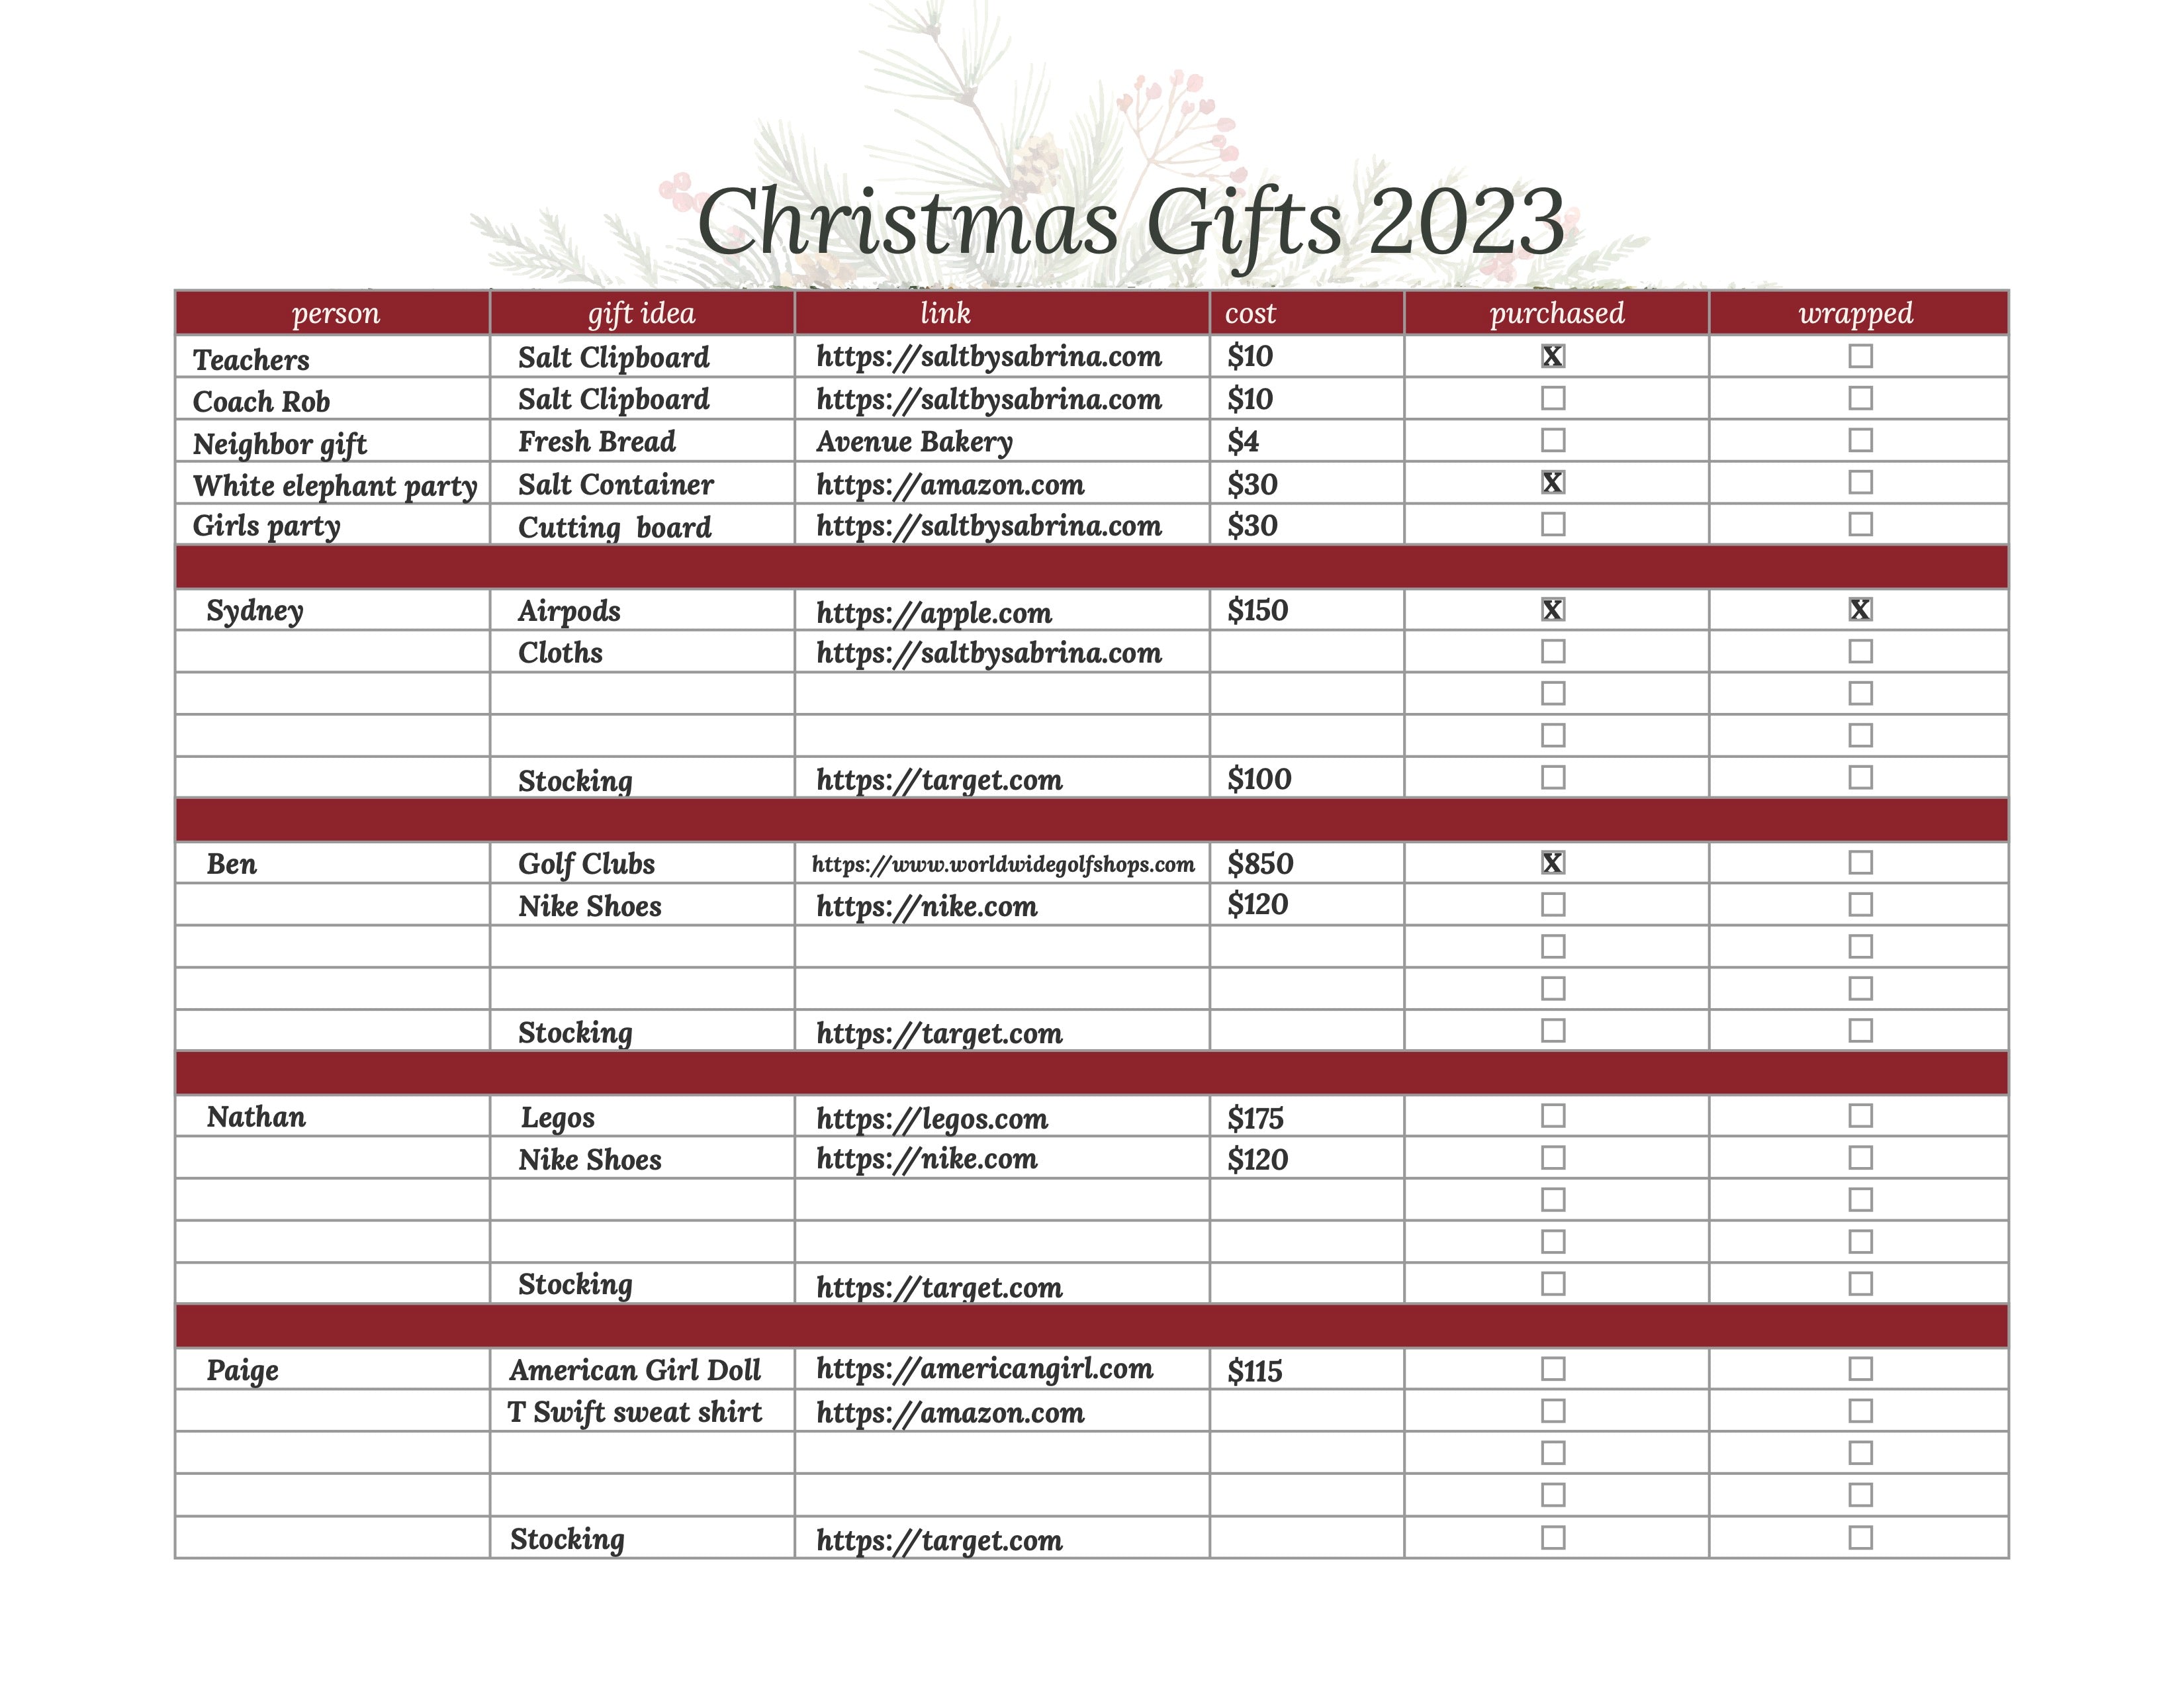 Christmas gifting spreadsheet by Salt by Sabrina.